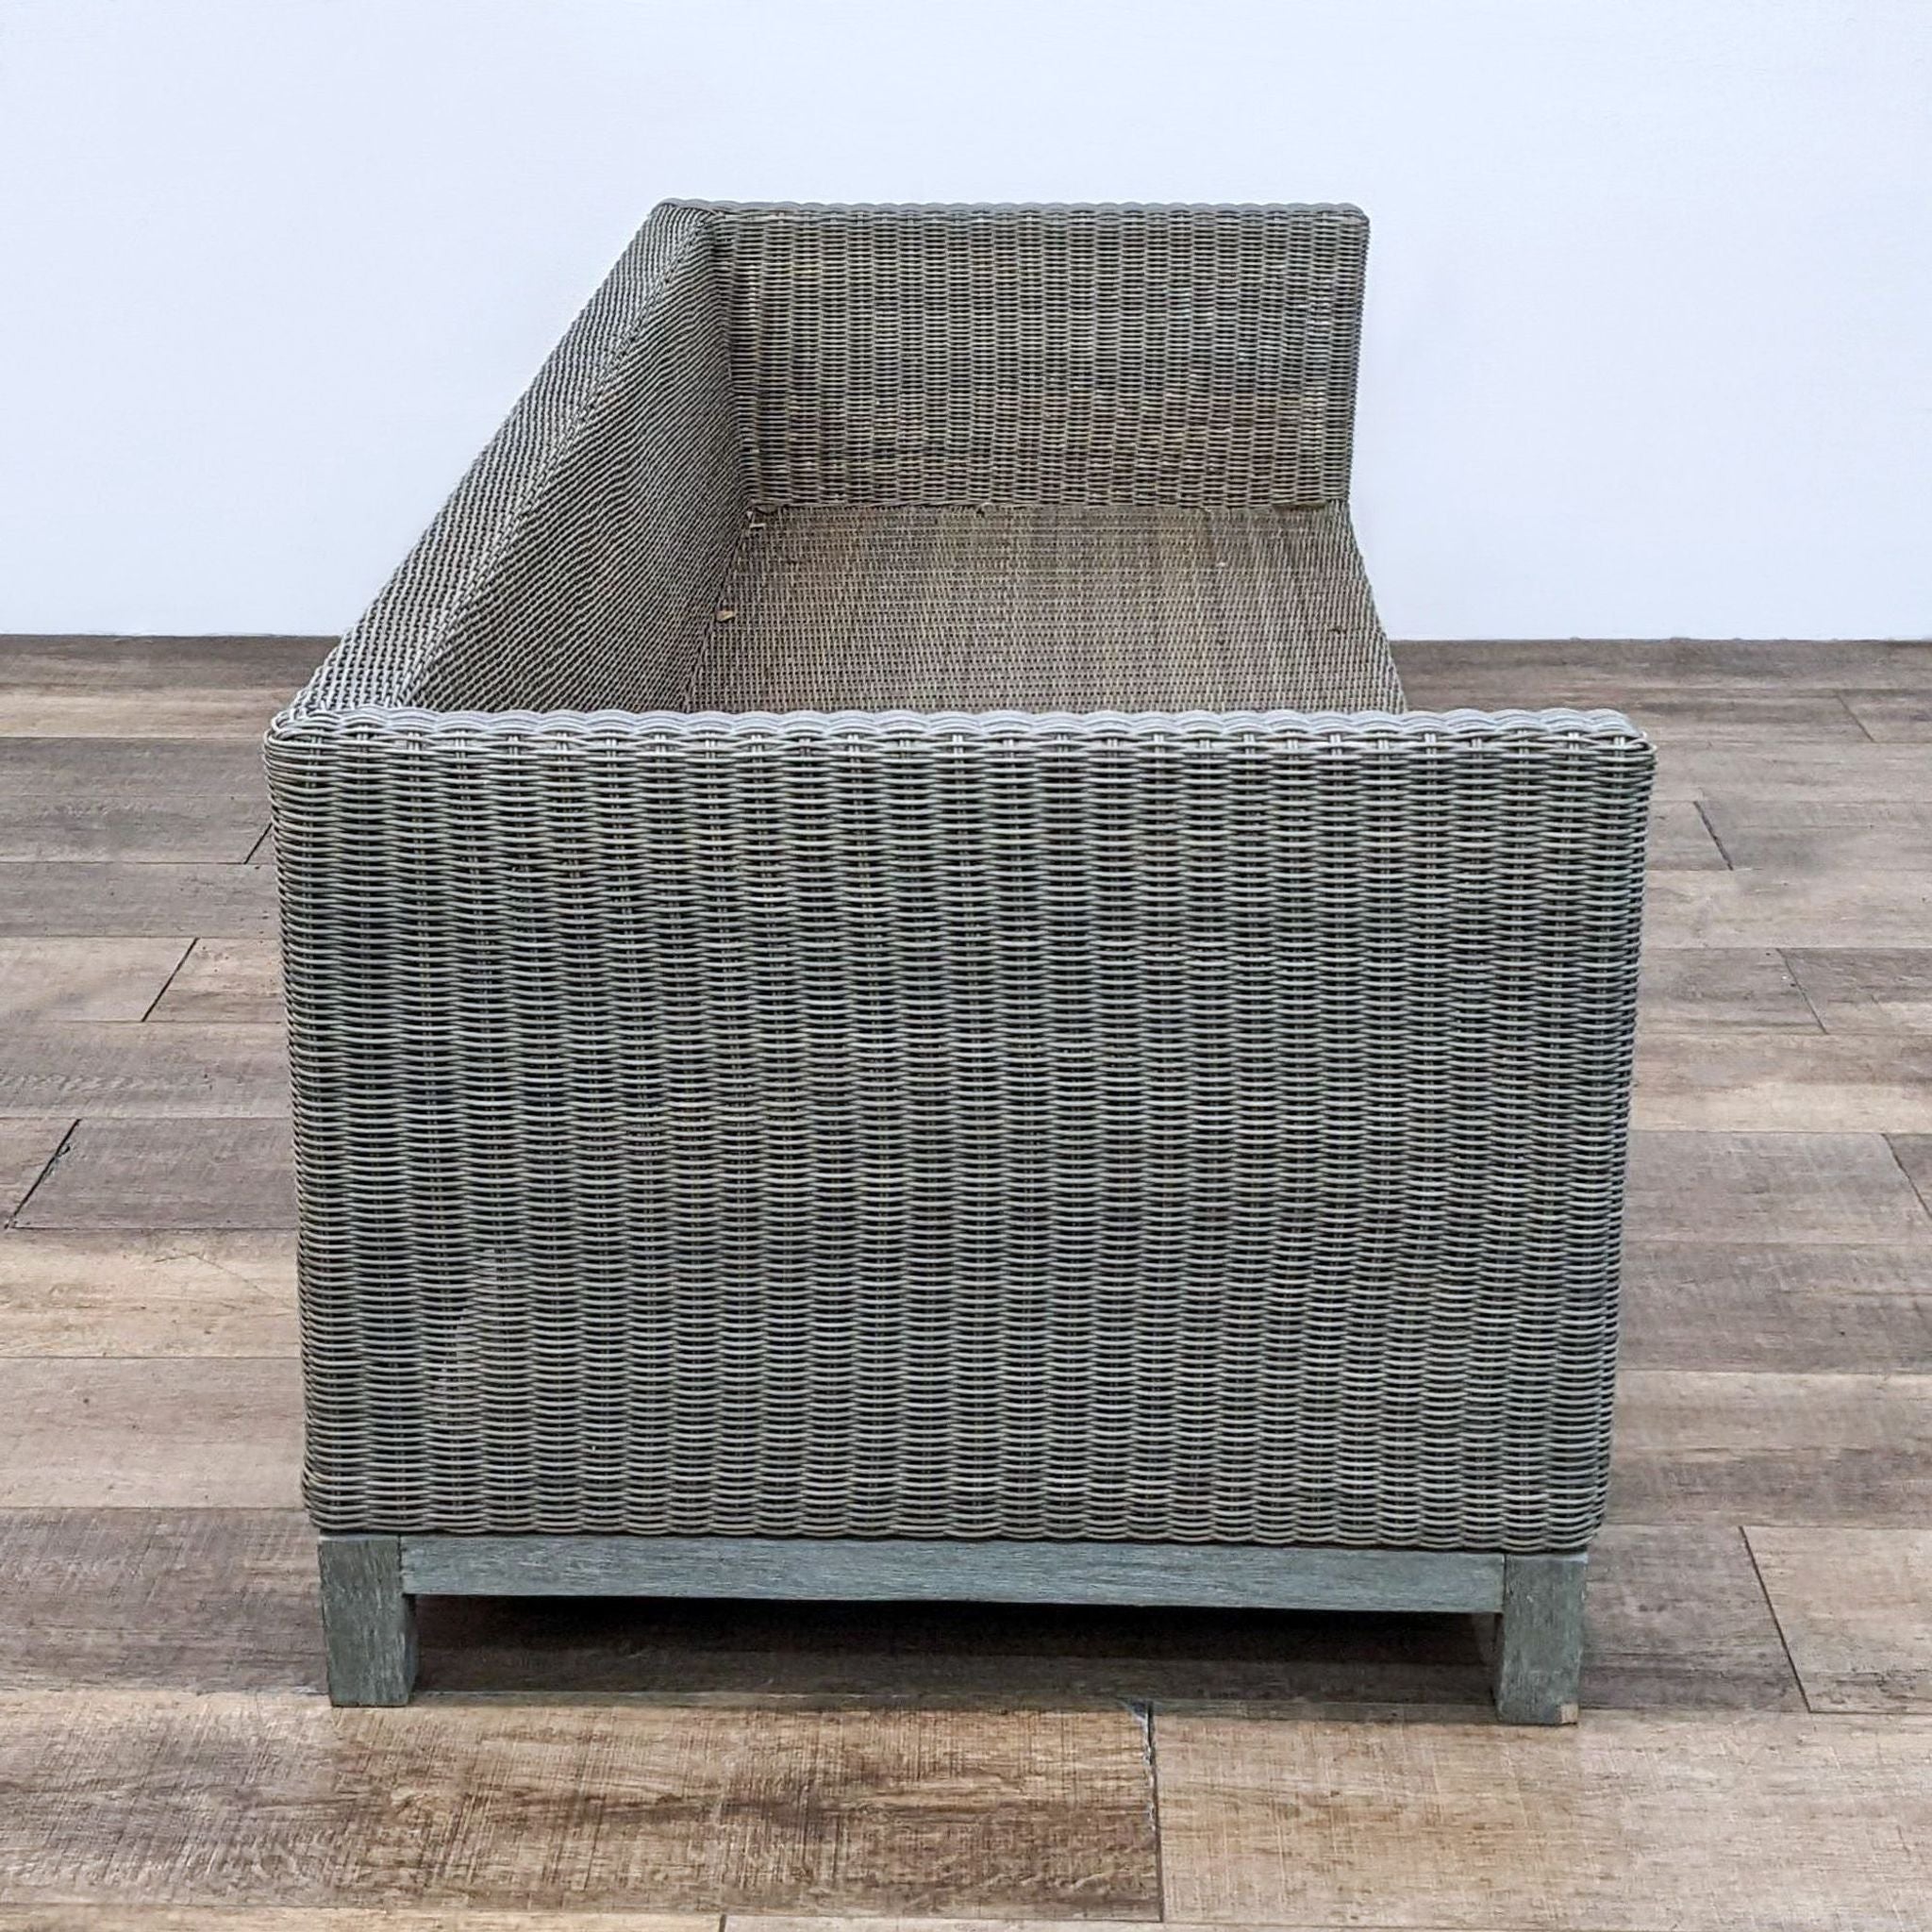 Alt text: Restoration Hardware resin wicker outdoor armchair with modern teak wood frame on a wooden floor.